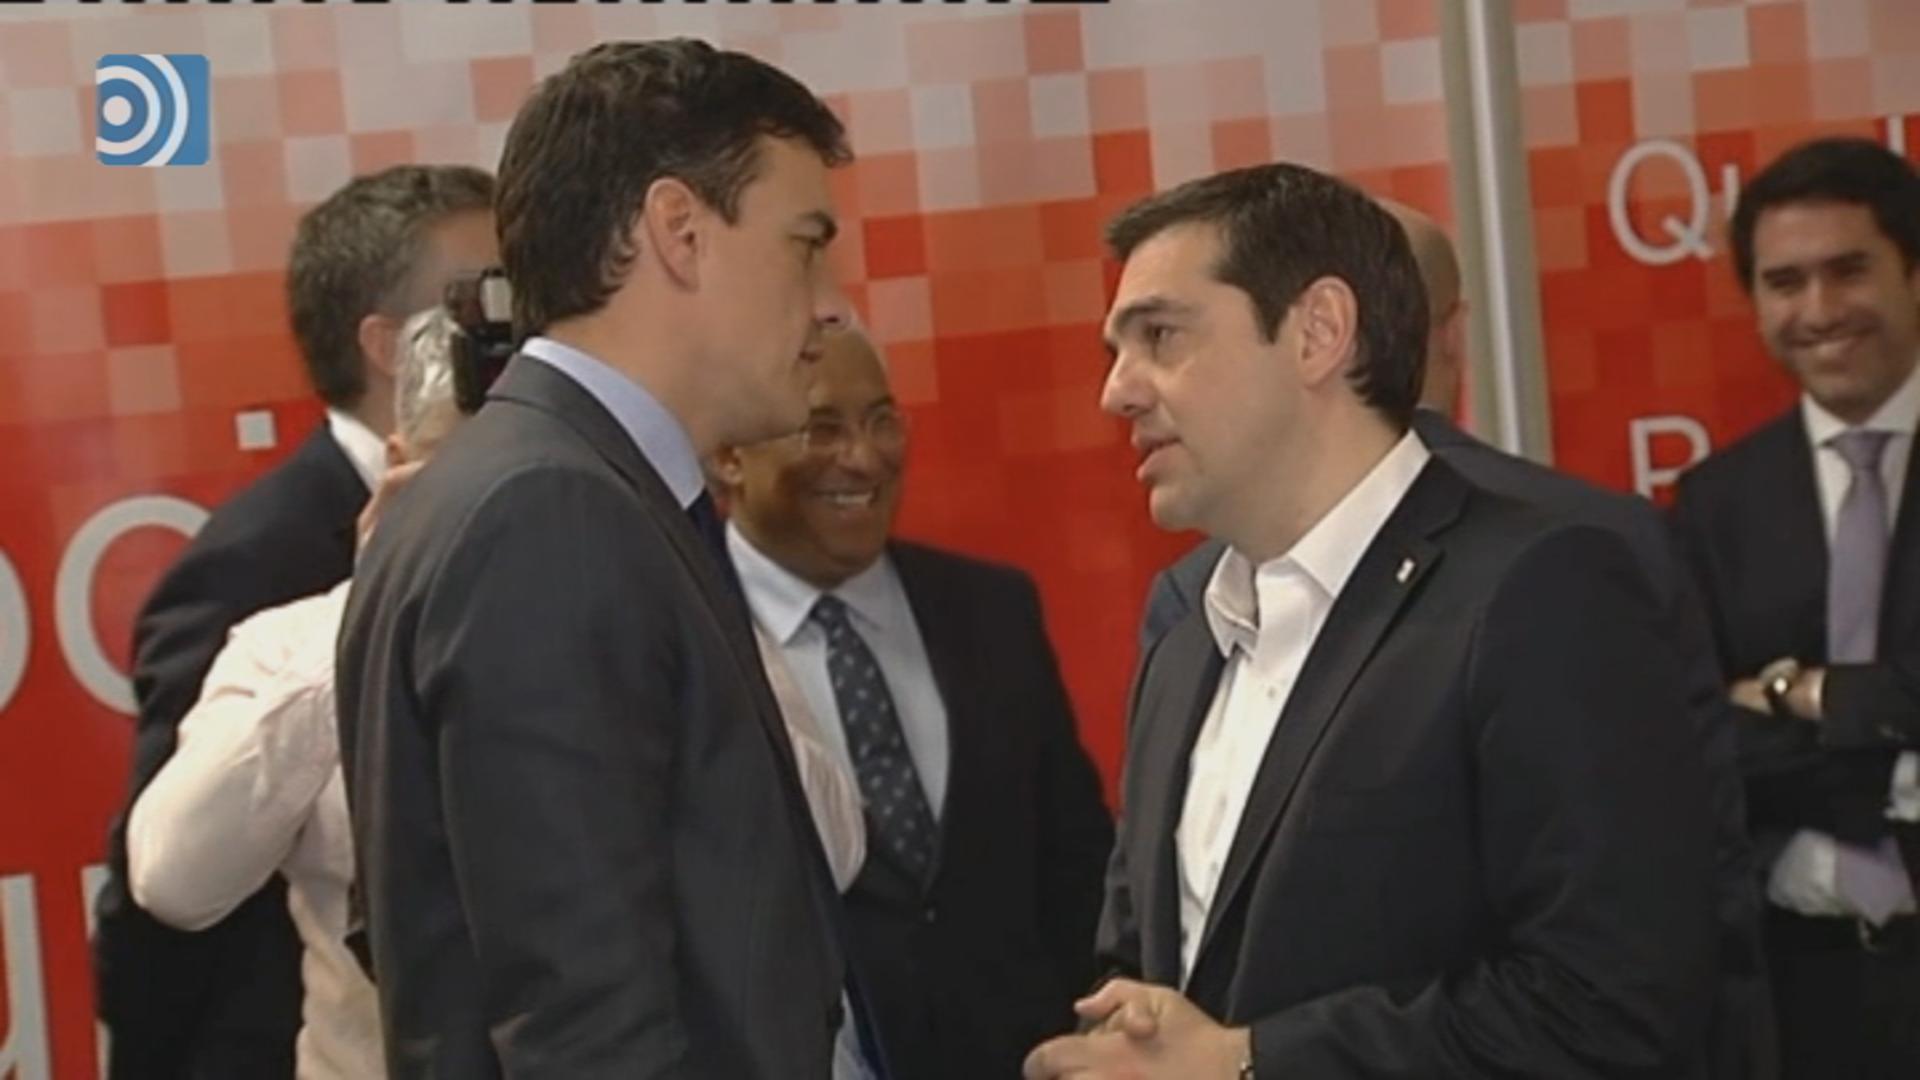 ¿Cuánto mide Alexis Tsipras? - Real height Pedro-sanchez-pide-a-tsipras-que-interceda-para-que-pablo-iglesias-facilite-su-investidura-6055592-1